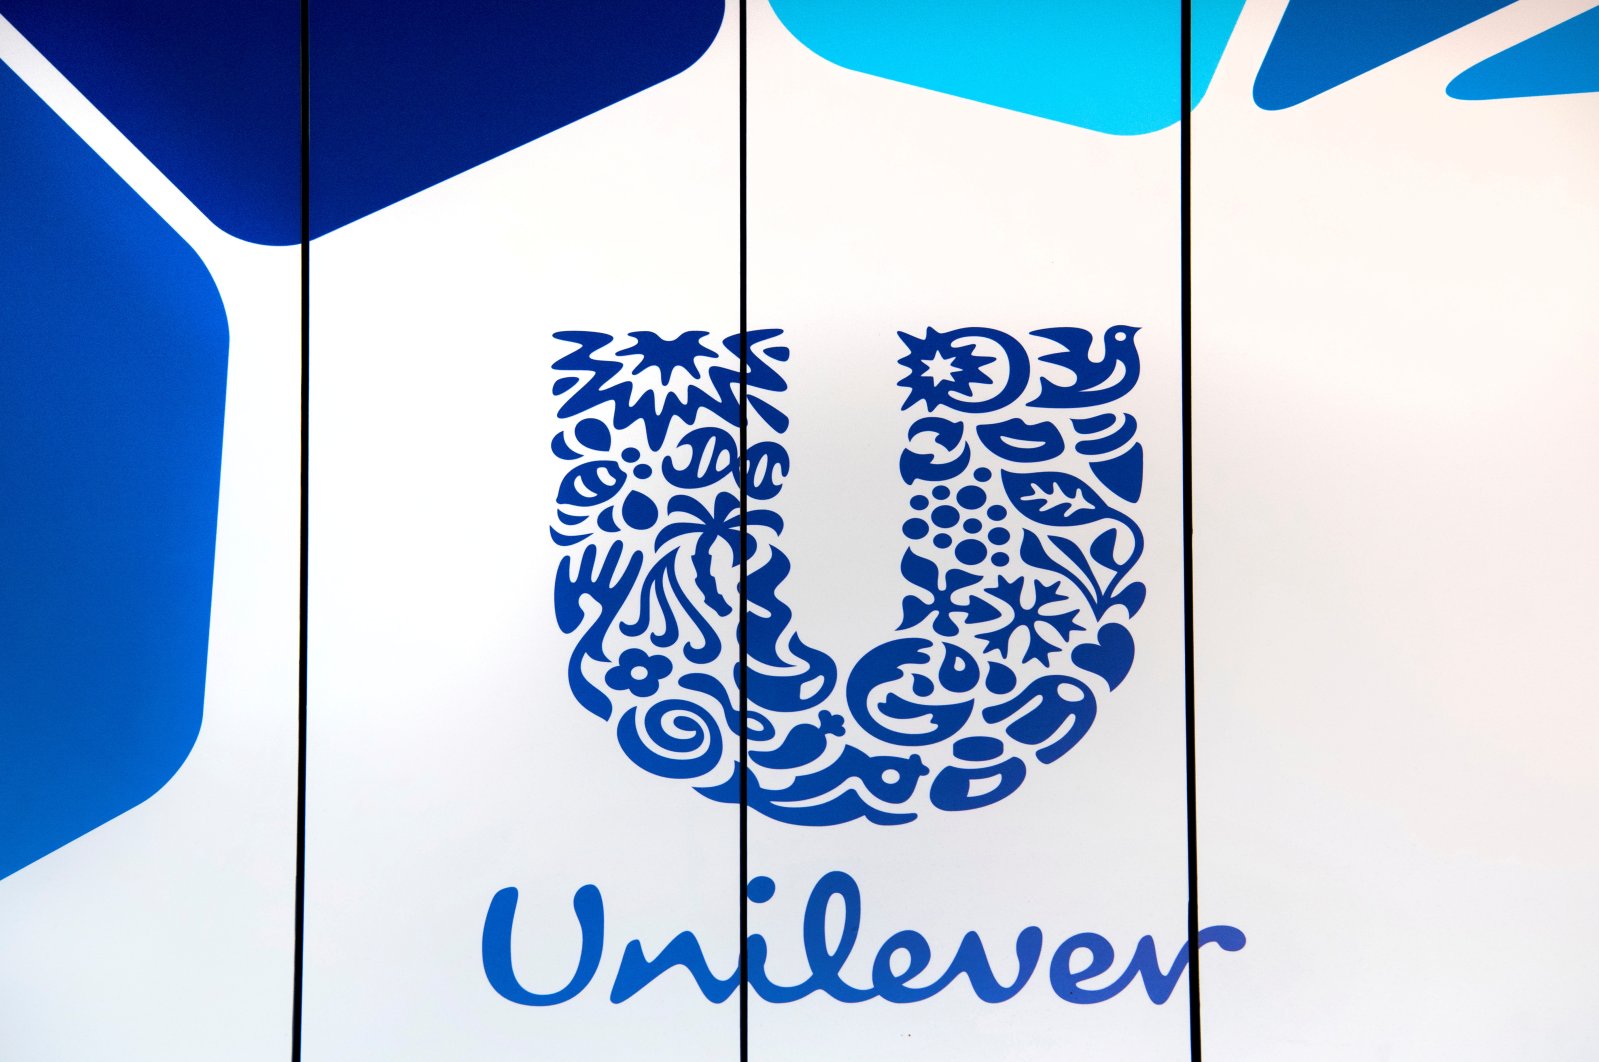 The logo of Unilever is seen at its building in Rotterdam, Netherlands, Aug. 21, 2018. (REUTERS/Piroschka van de Wouw)